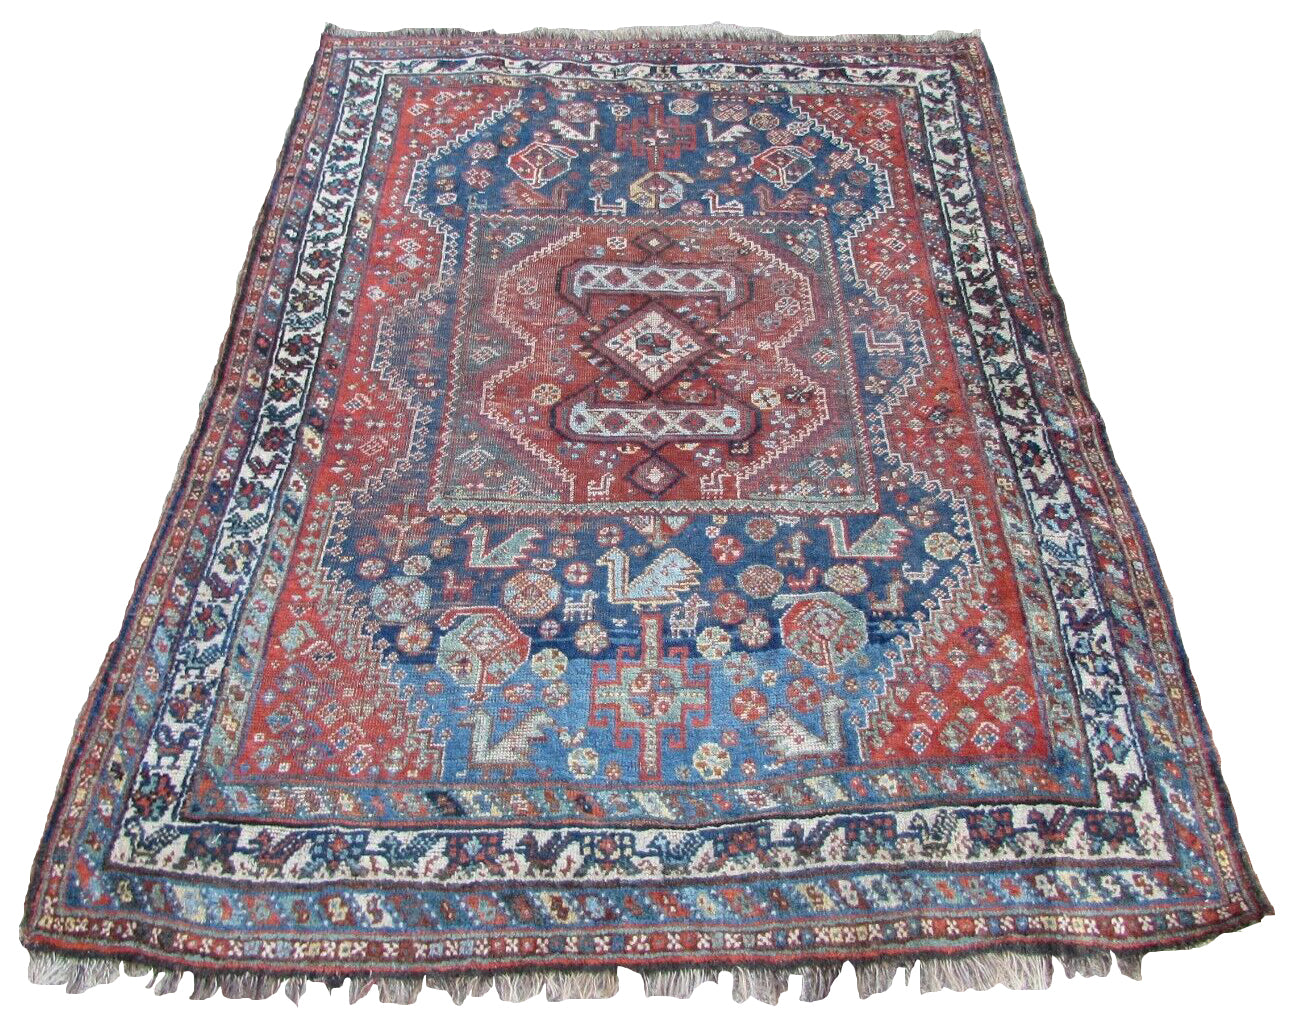 Antique Persian Shiraz rug with decorative birds design